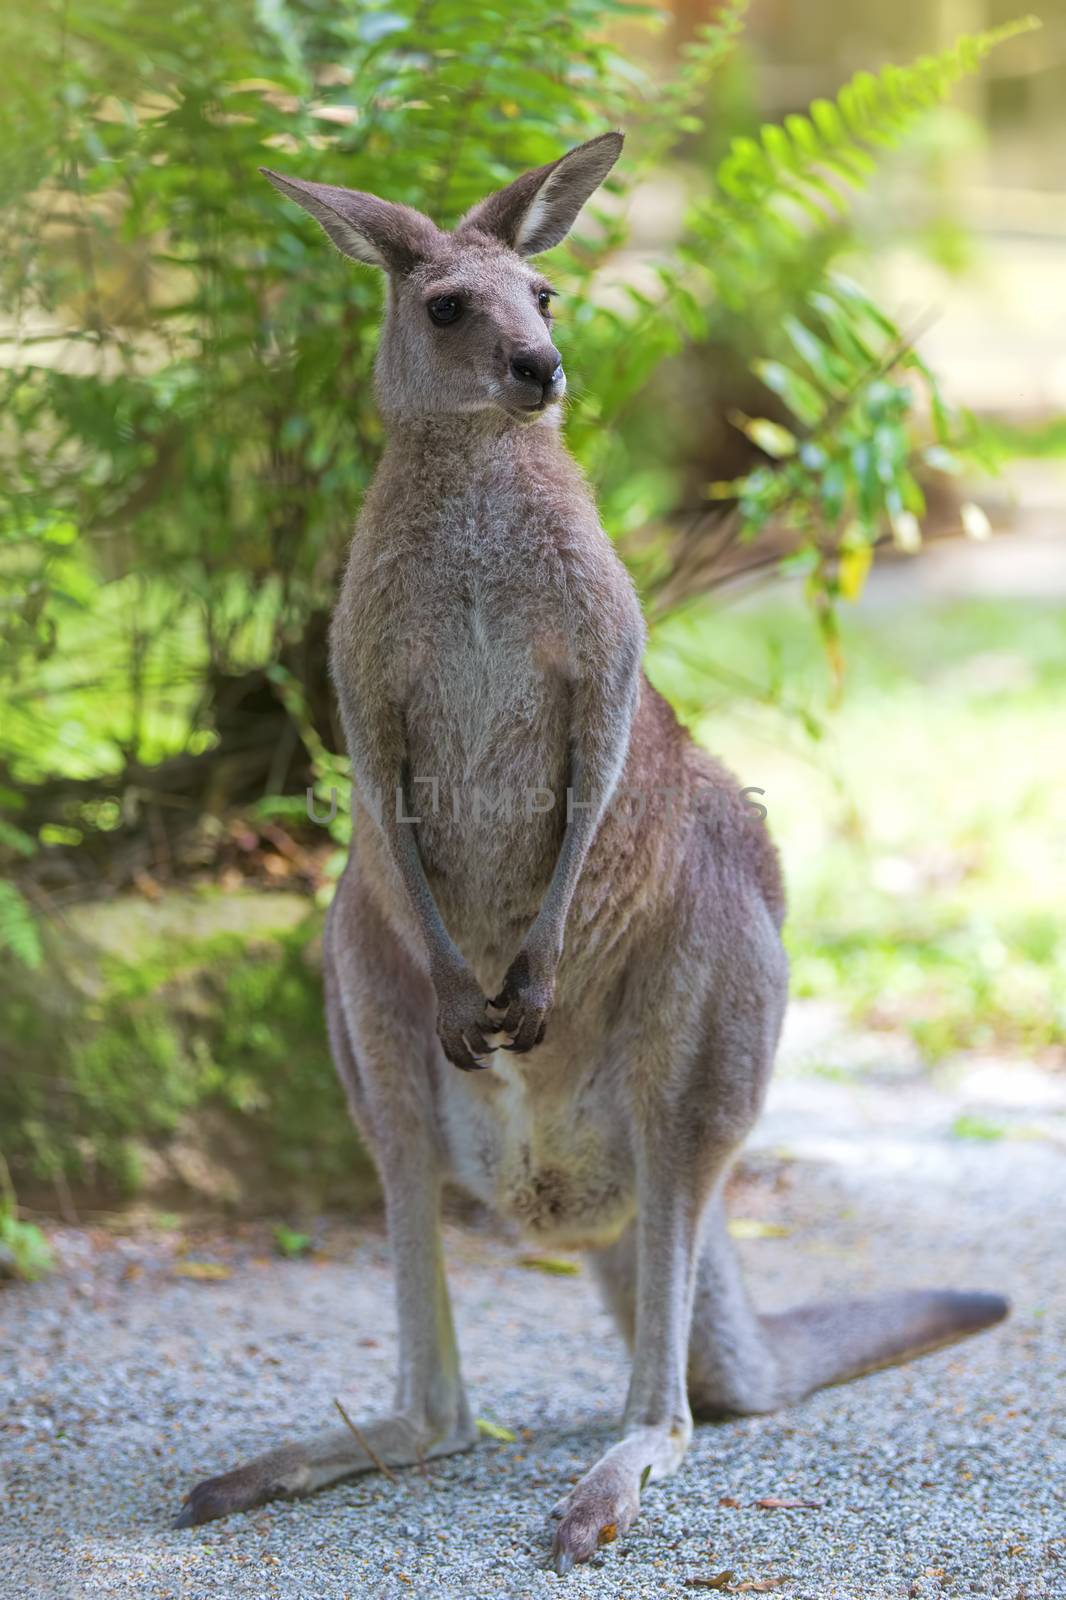 Eastern Grey Kangaroo in the wild in Australia